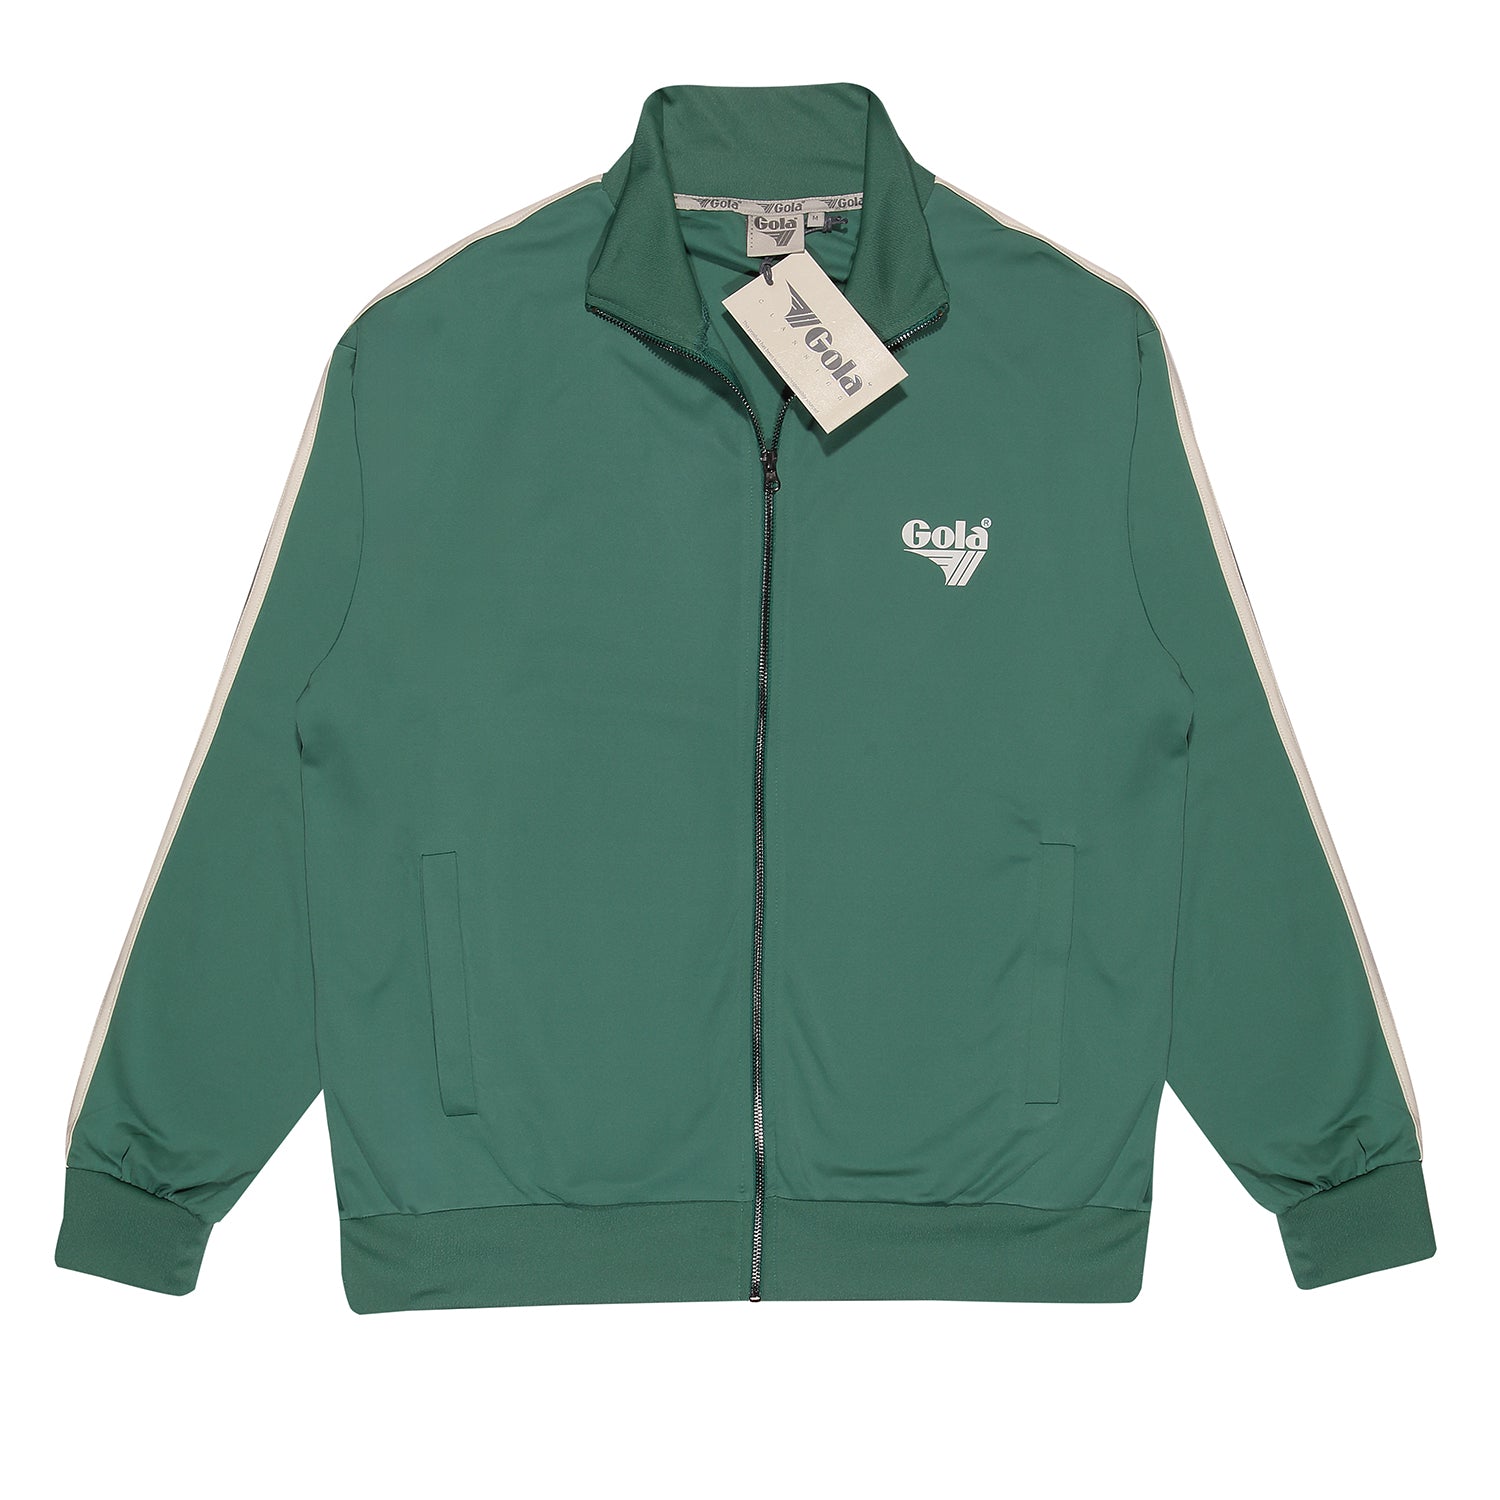 Gola Classic Printed Zip Up Track Top Jacket Green - Raw Menswear